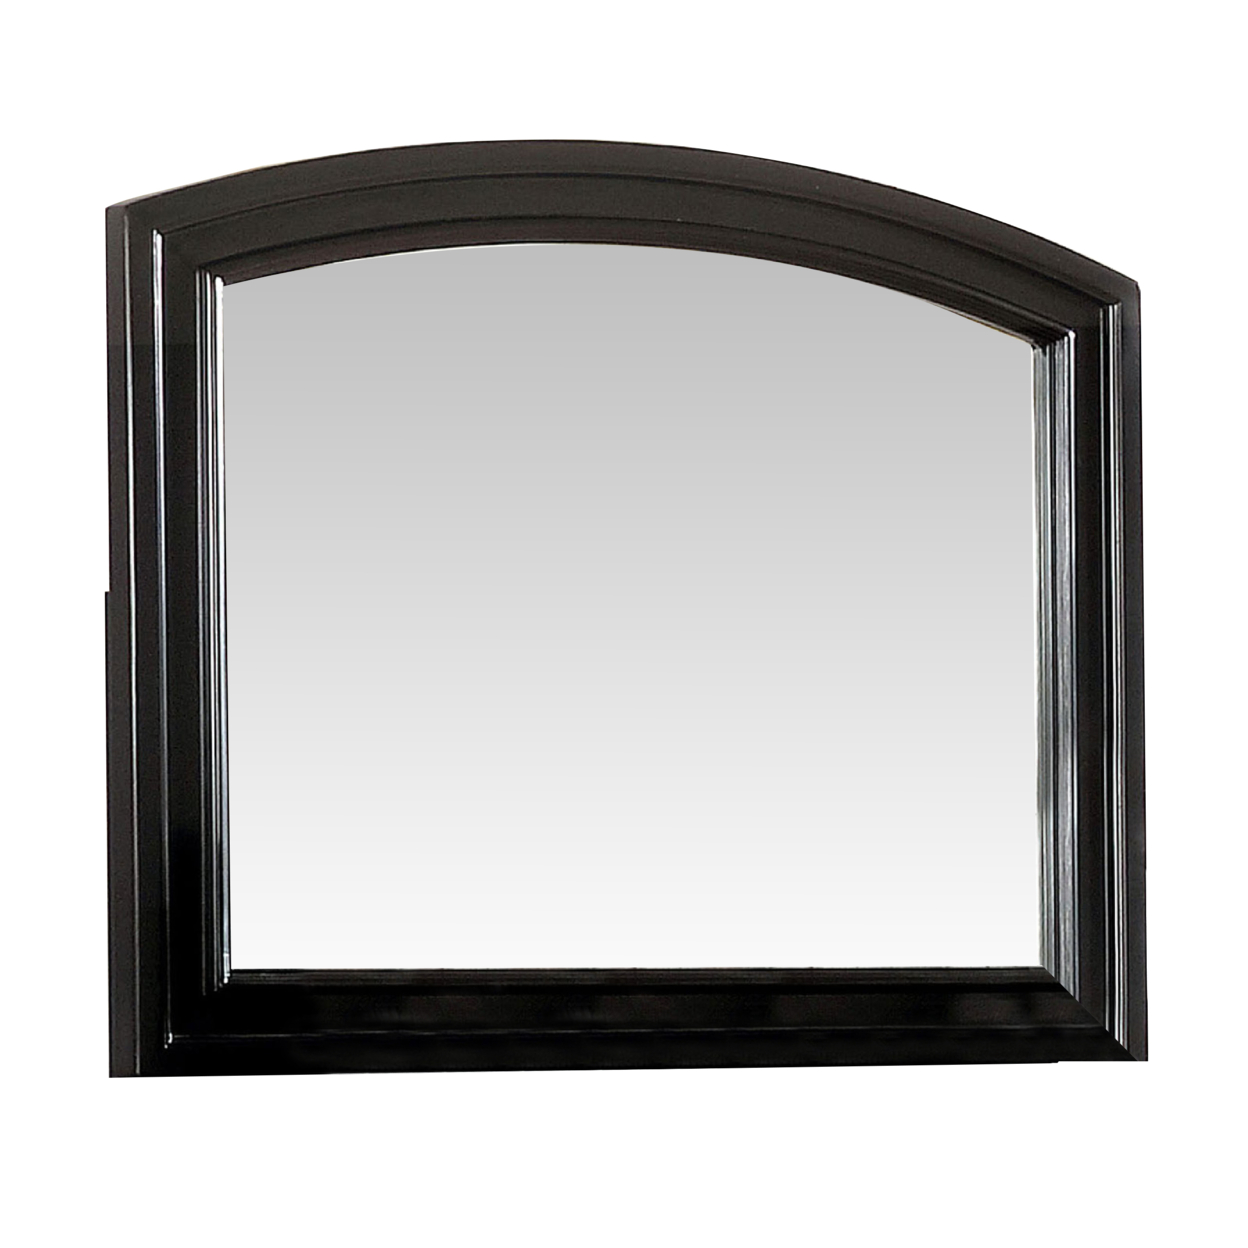 Glan 42 Inch Wall Mirror, Molded Trim, Wood Frame, Curved Top, Black- Saltoro Sherpi